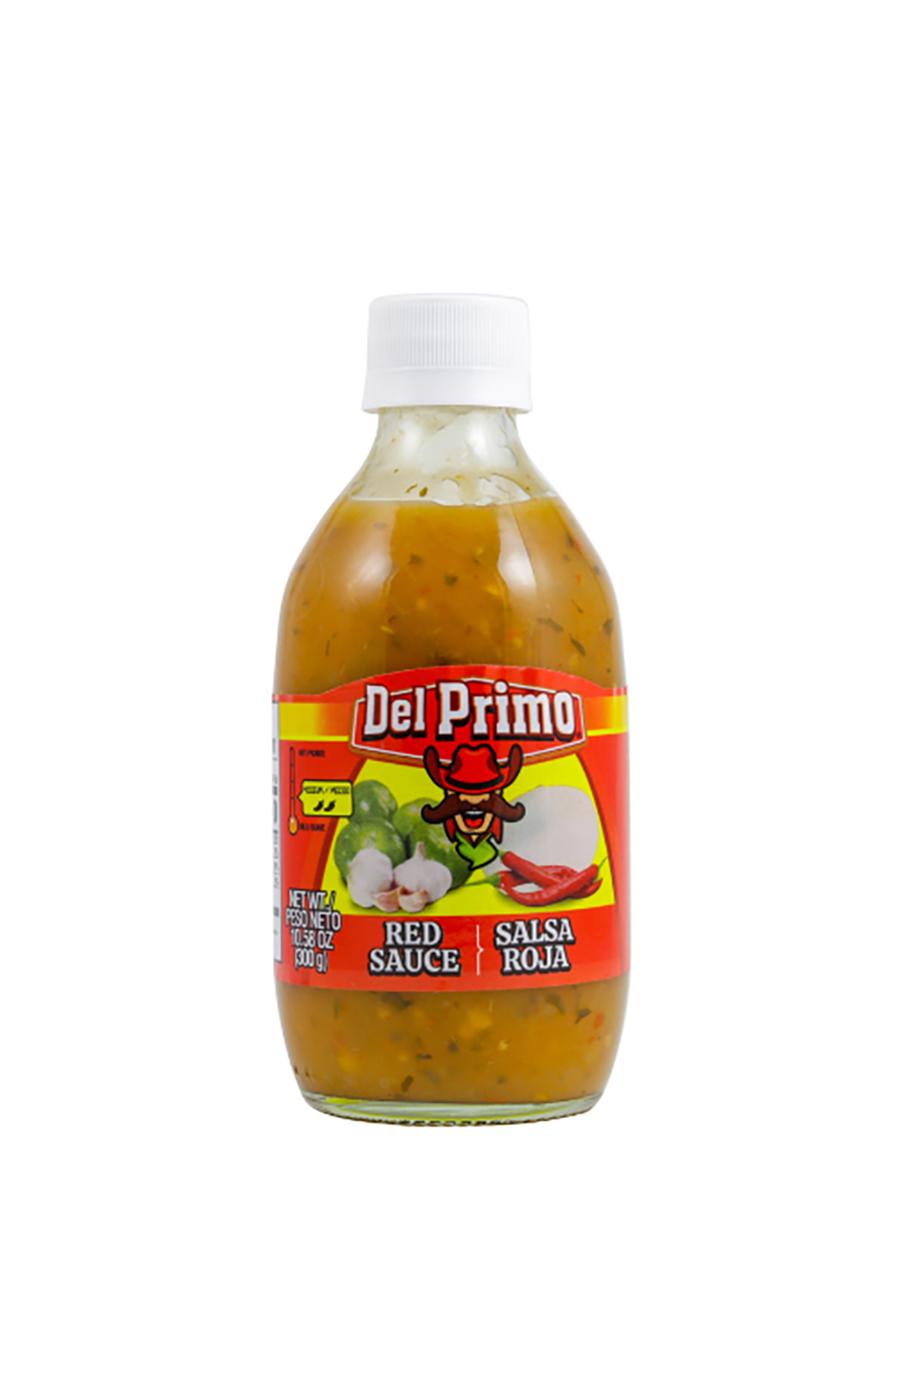 Del Primo Salsa Roja Red Sauce; image 1 of 3